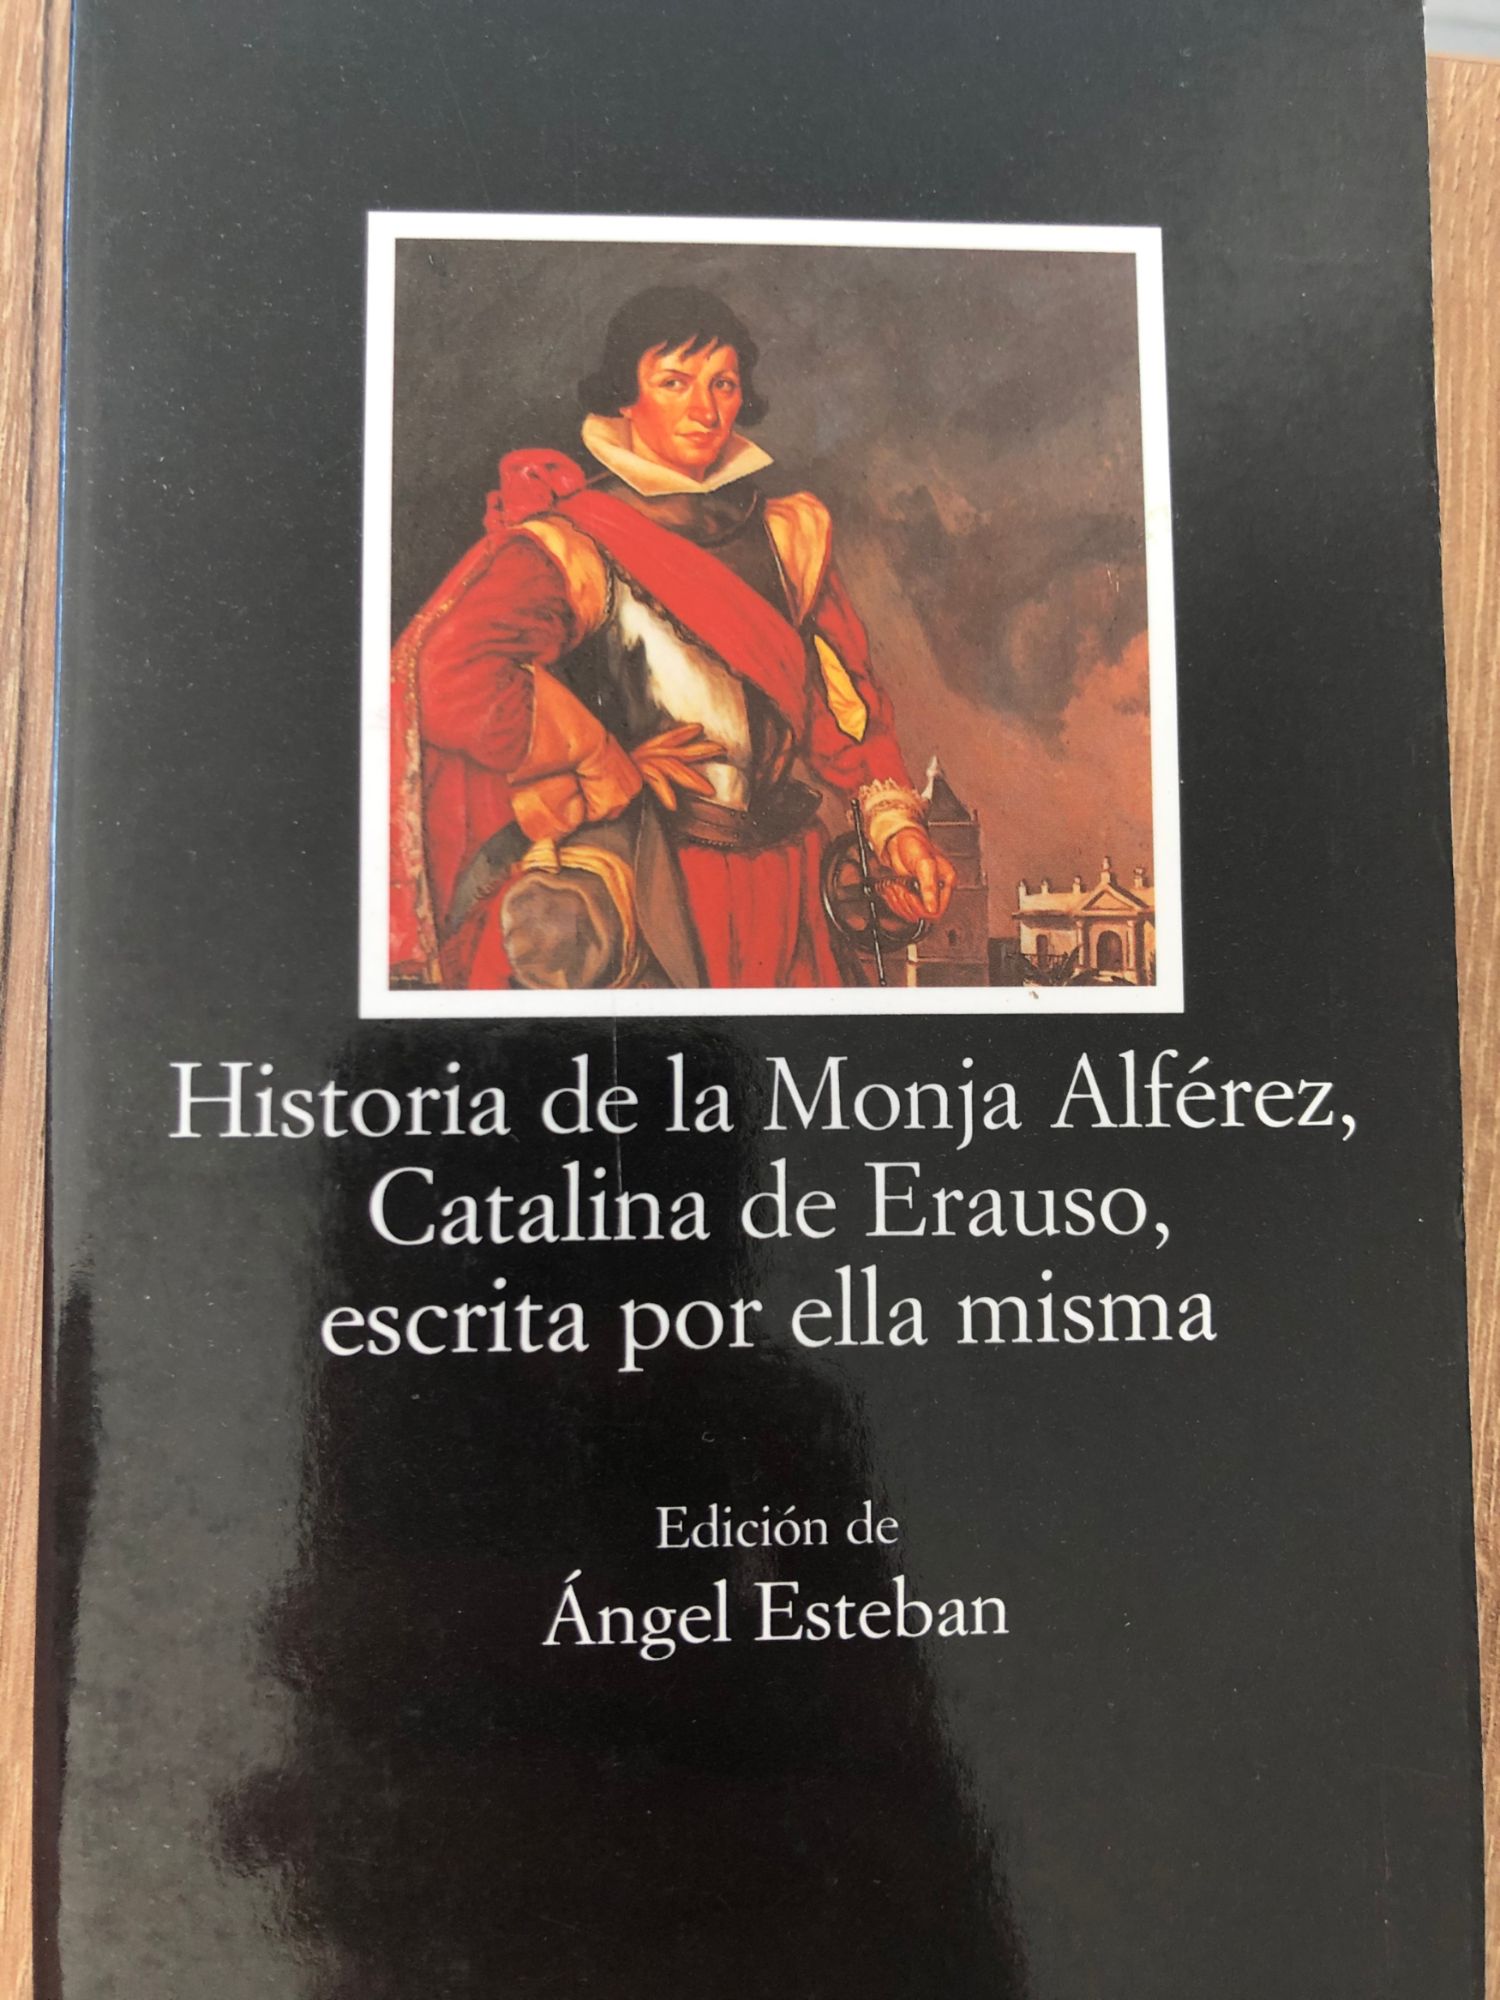 Historia De La Monja Alferez, Catalina de Erauso, Escrita for Ella Misma/Story of the Nun Alferez, Catalina de Erauso, Her Own Writing